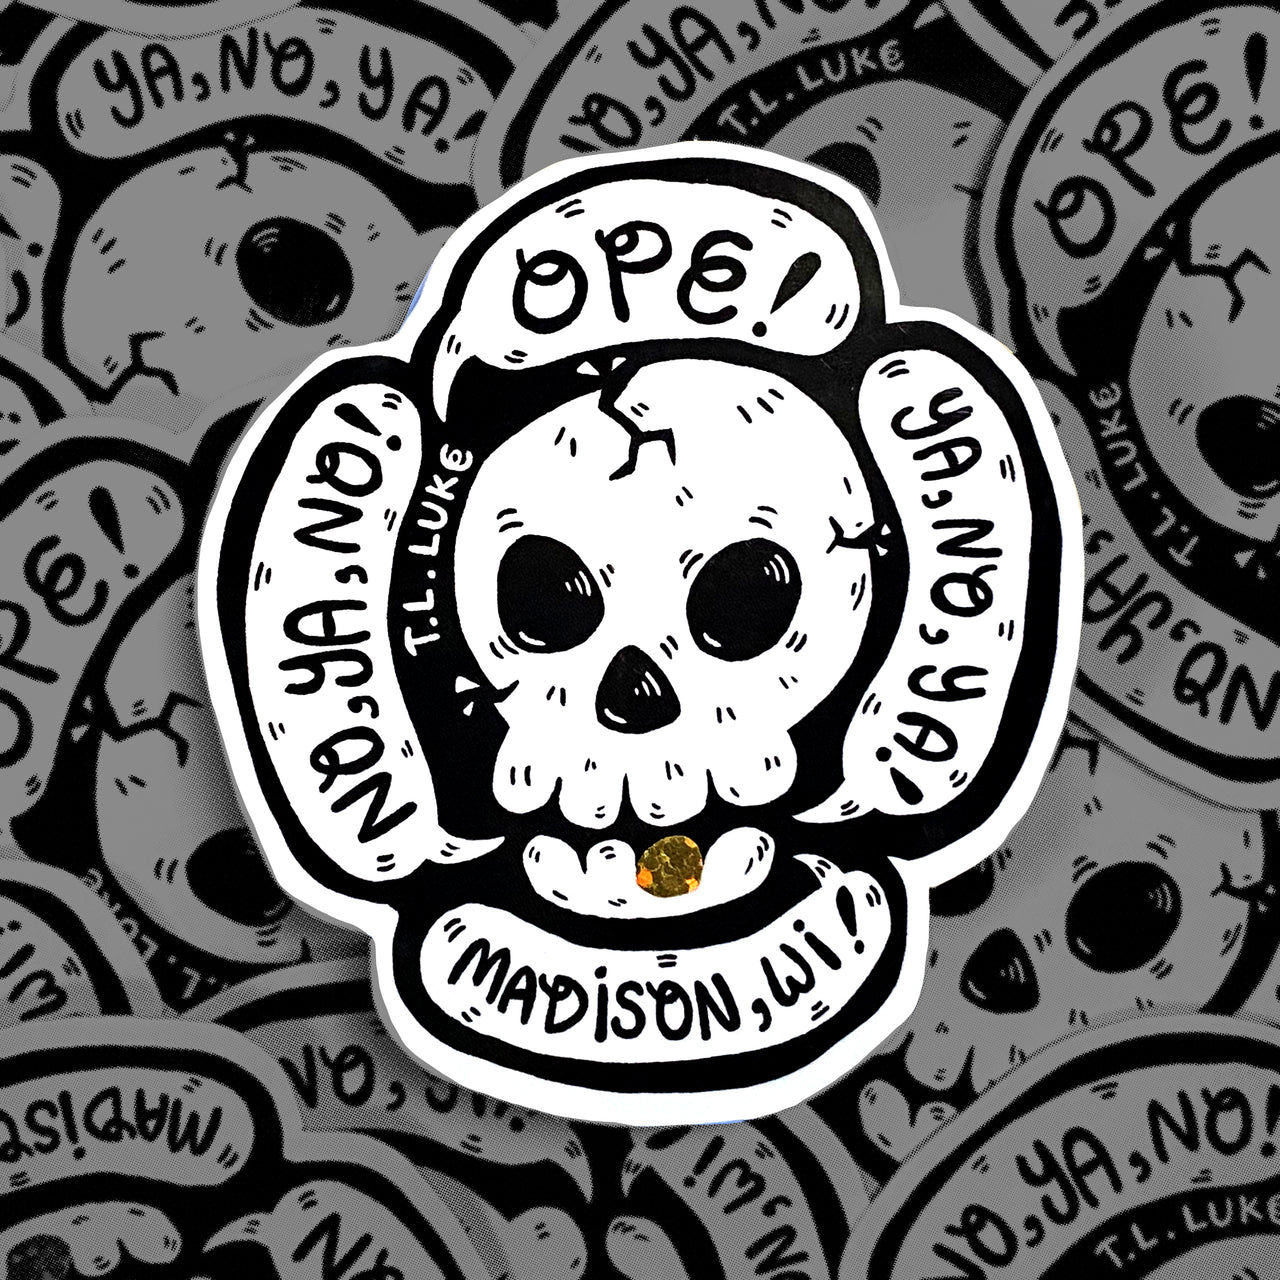 Ope! Madison Skull Sticker